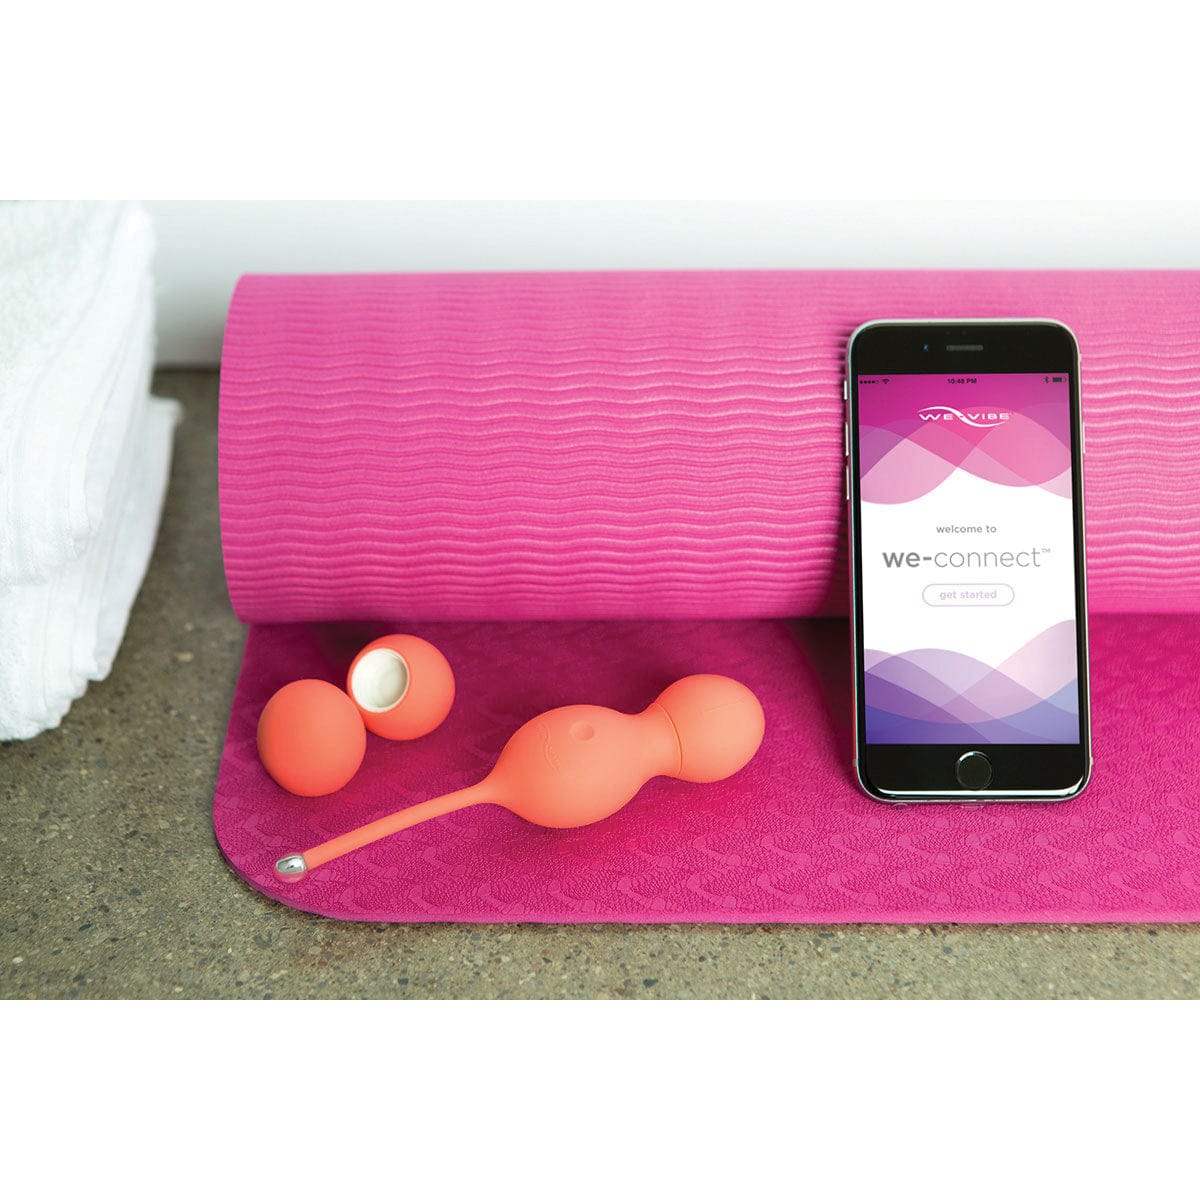 Lovelife Krush Smart Kegel Exerciser and App-Controlled Pleasure Product